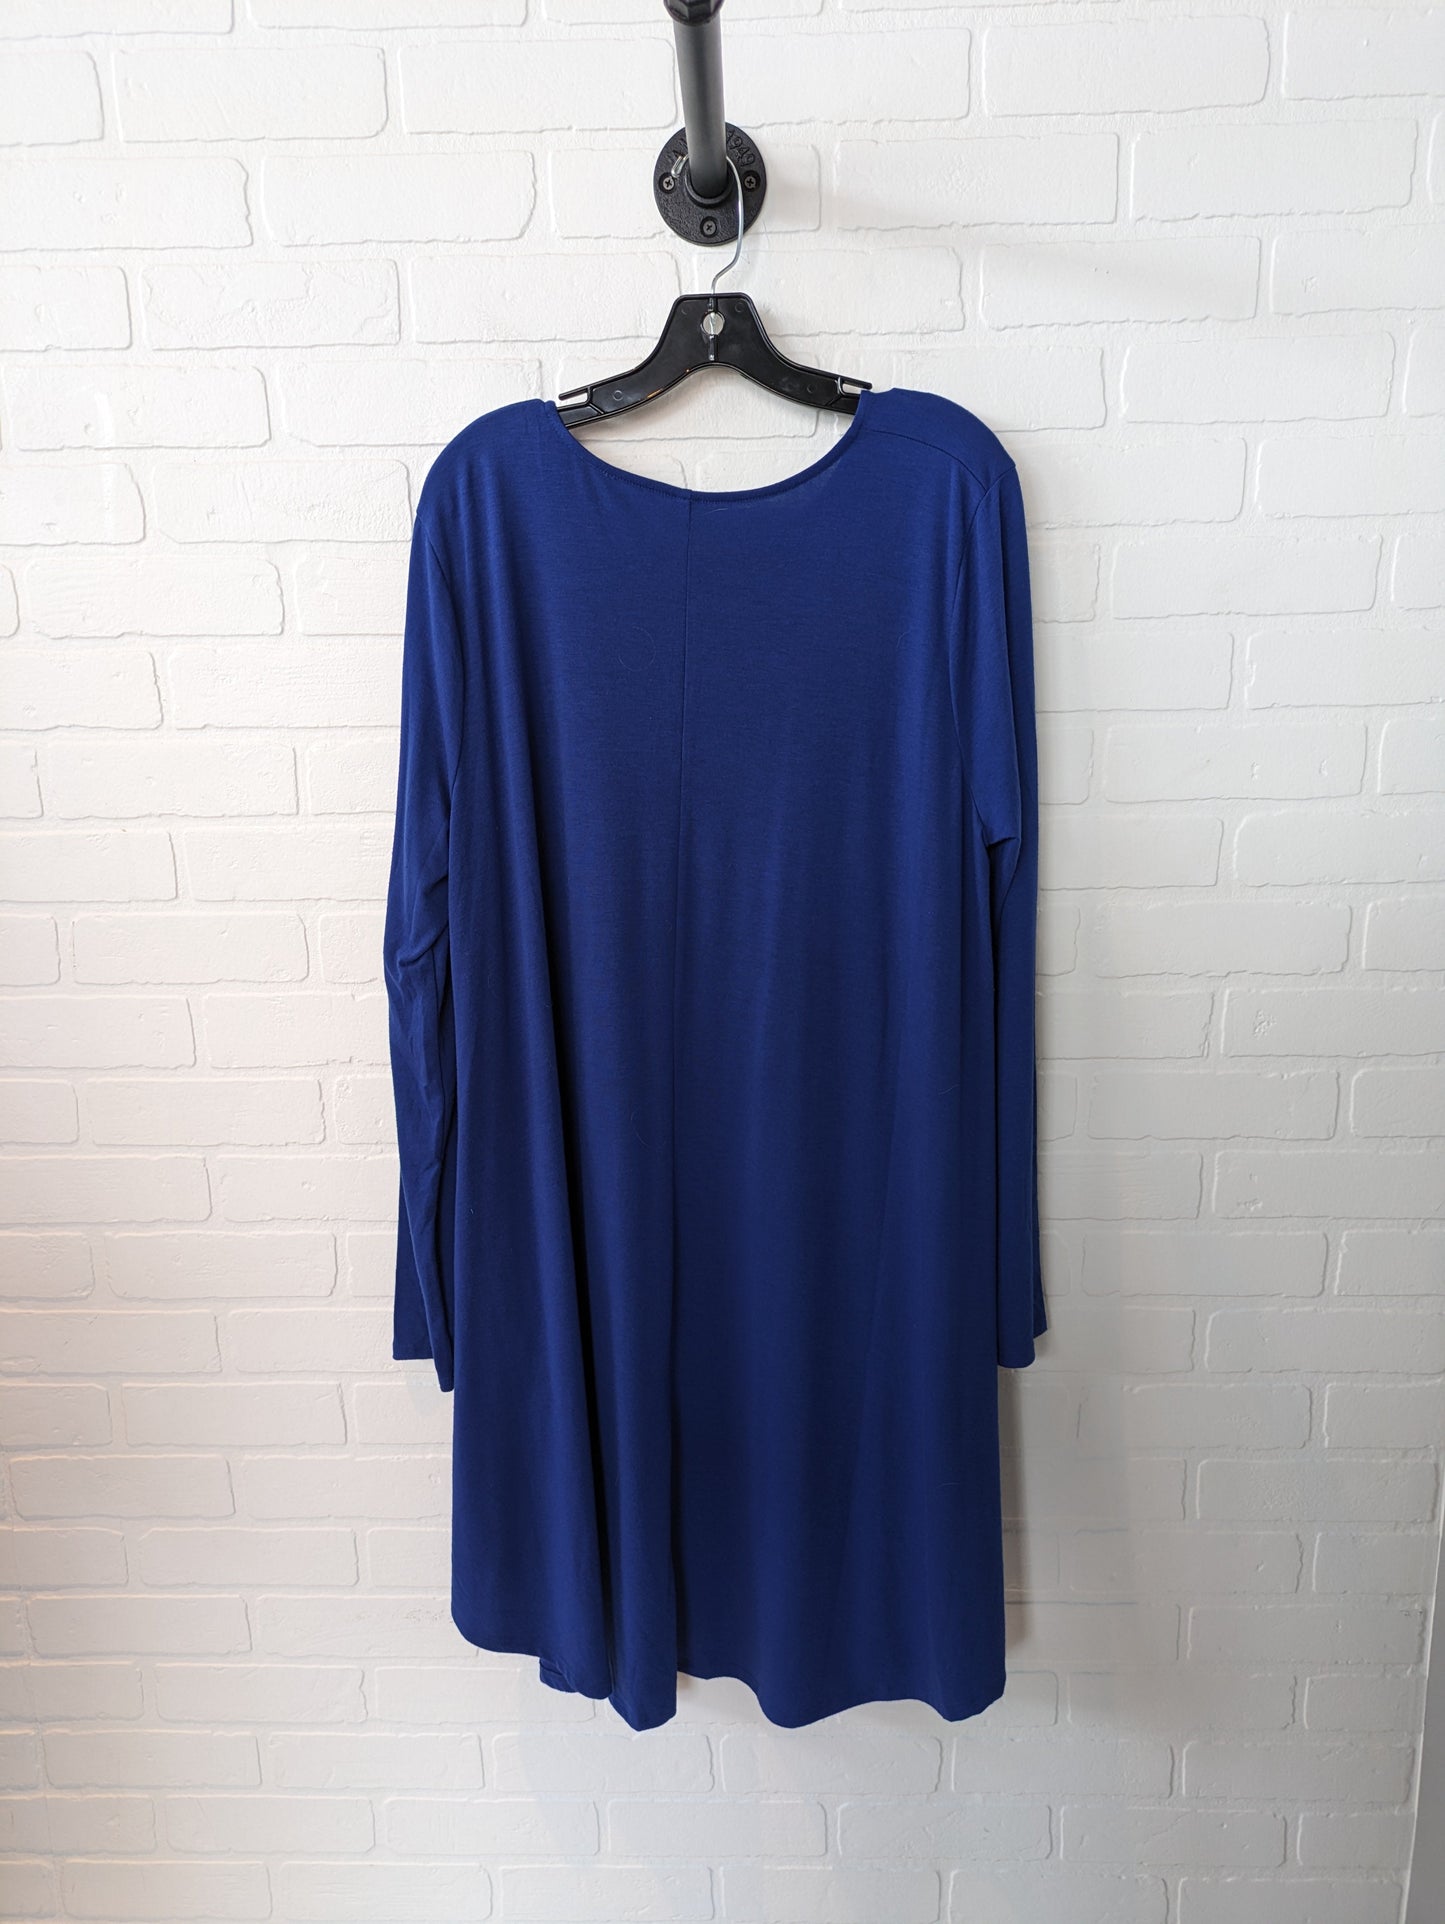 Dress Casual Midi By Zenana Outfitters  Size: 3x